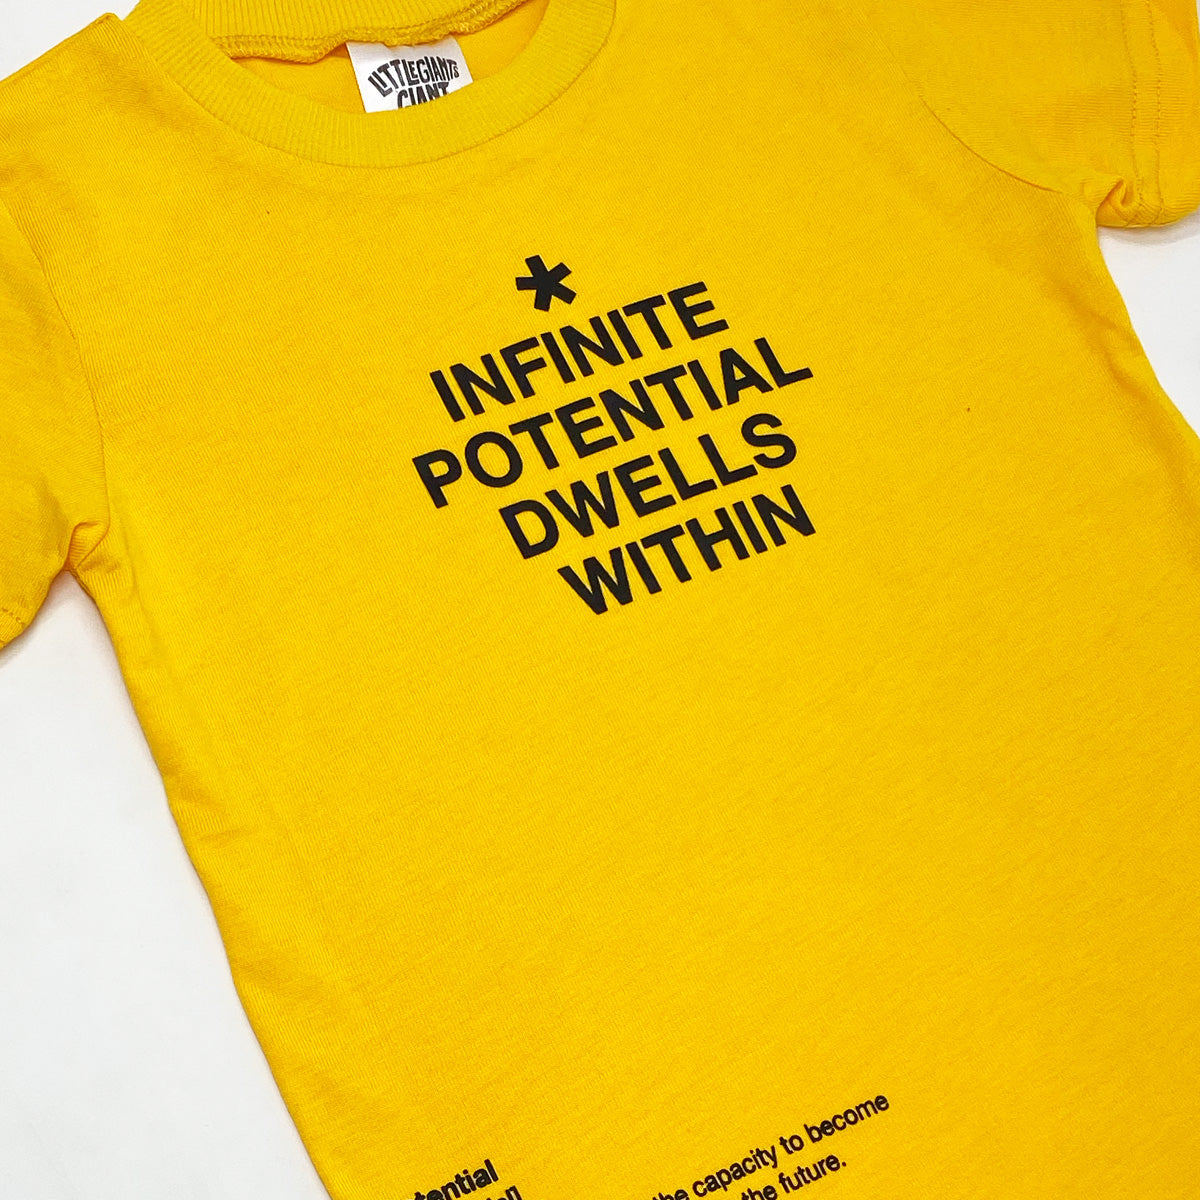 Infinite Potential T-Shirt (Yellow)